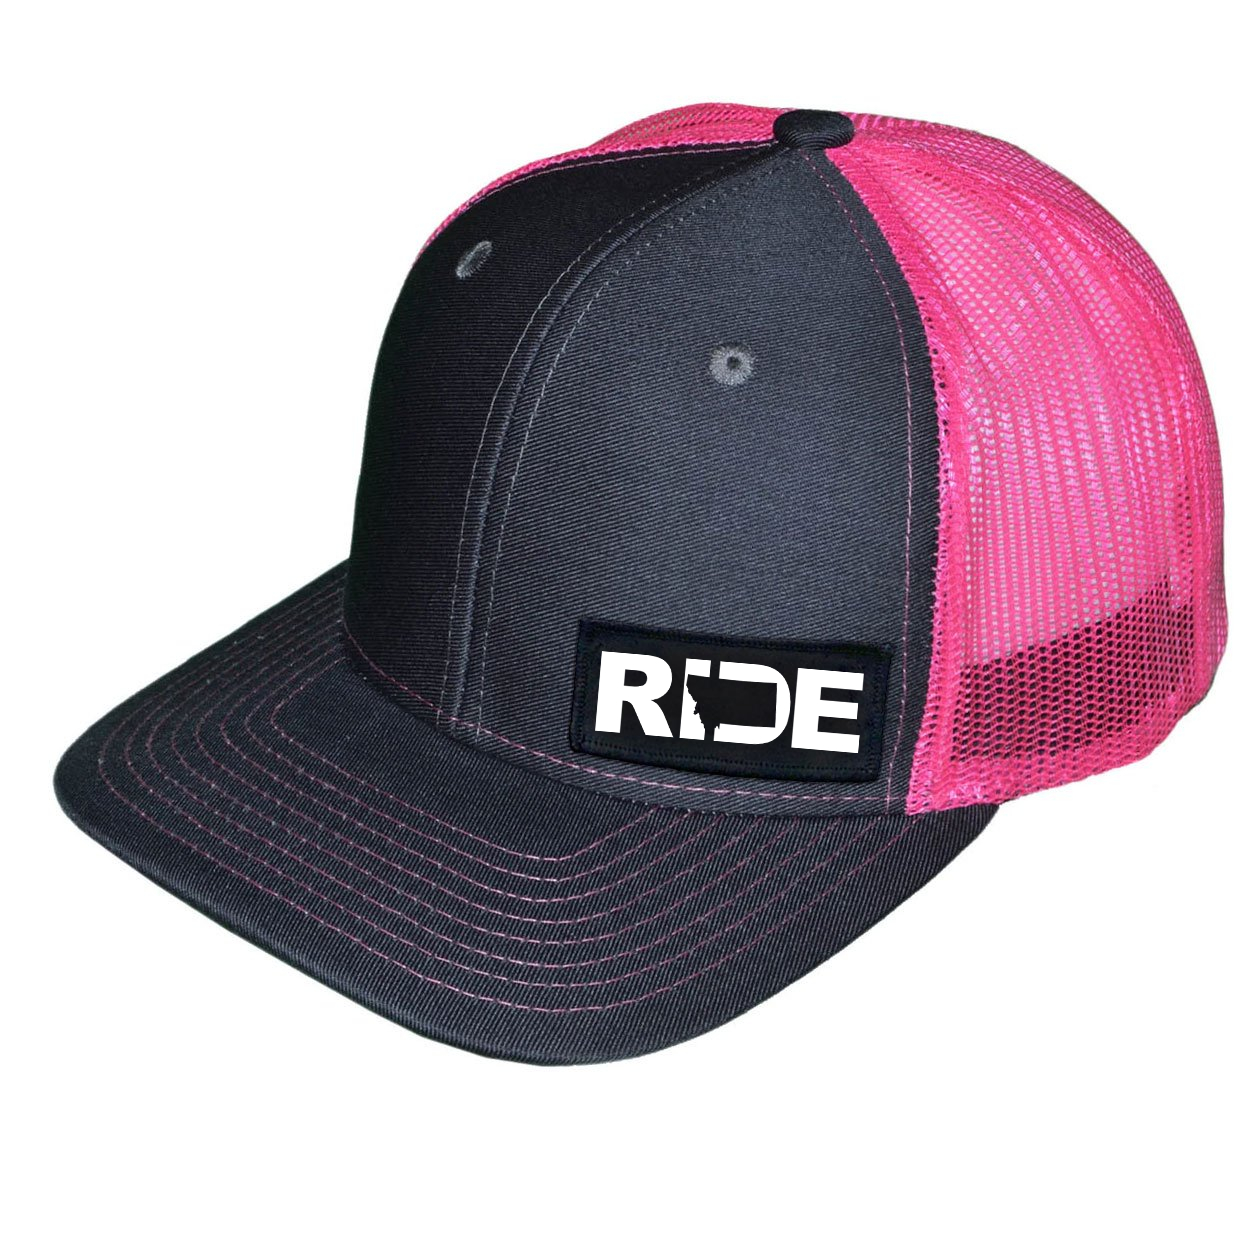 Ride Montana Night Out Woven Patch Snapback Trucker Hat Dark Gray/Neon Pink (White Logo)